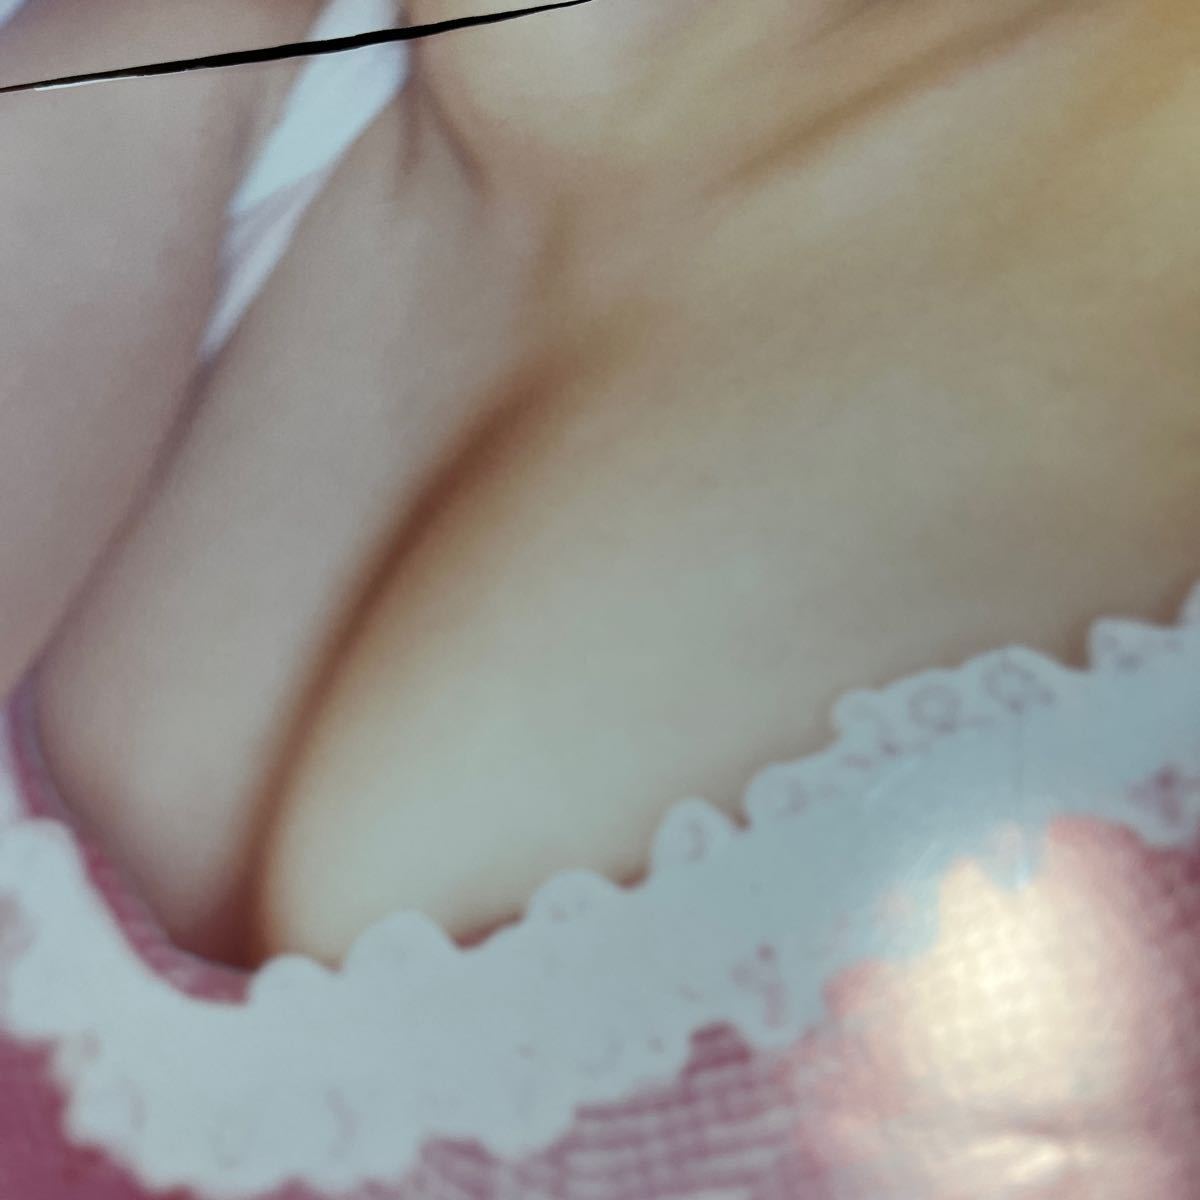  Saito Yuki Saito Yuki sexy . включено постер Ishikawa Rika вырезки включая доставку ik She's Morning Musume прекрасный ..